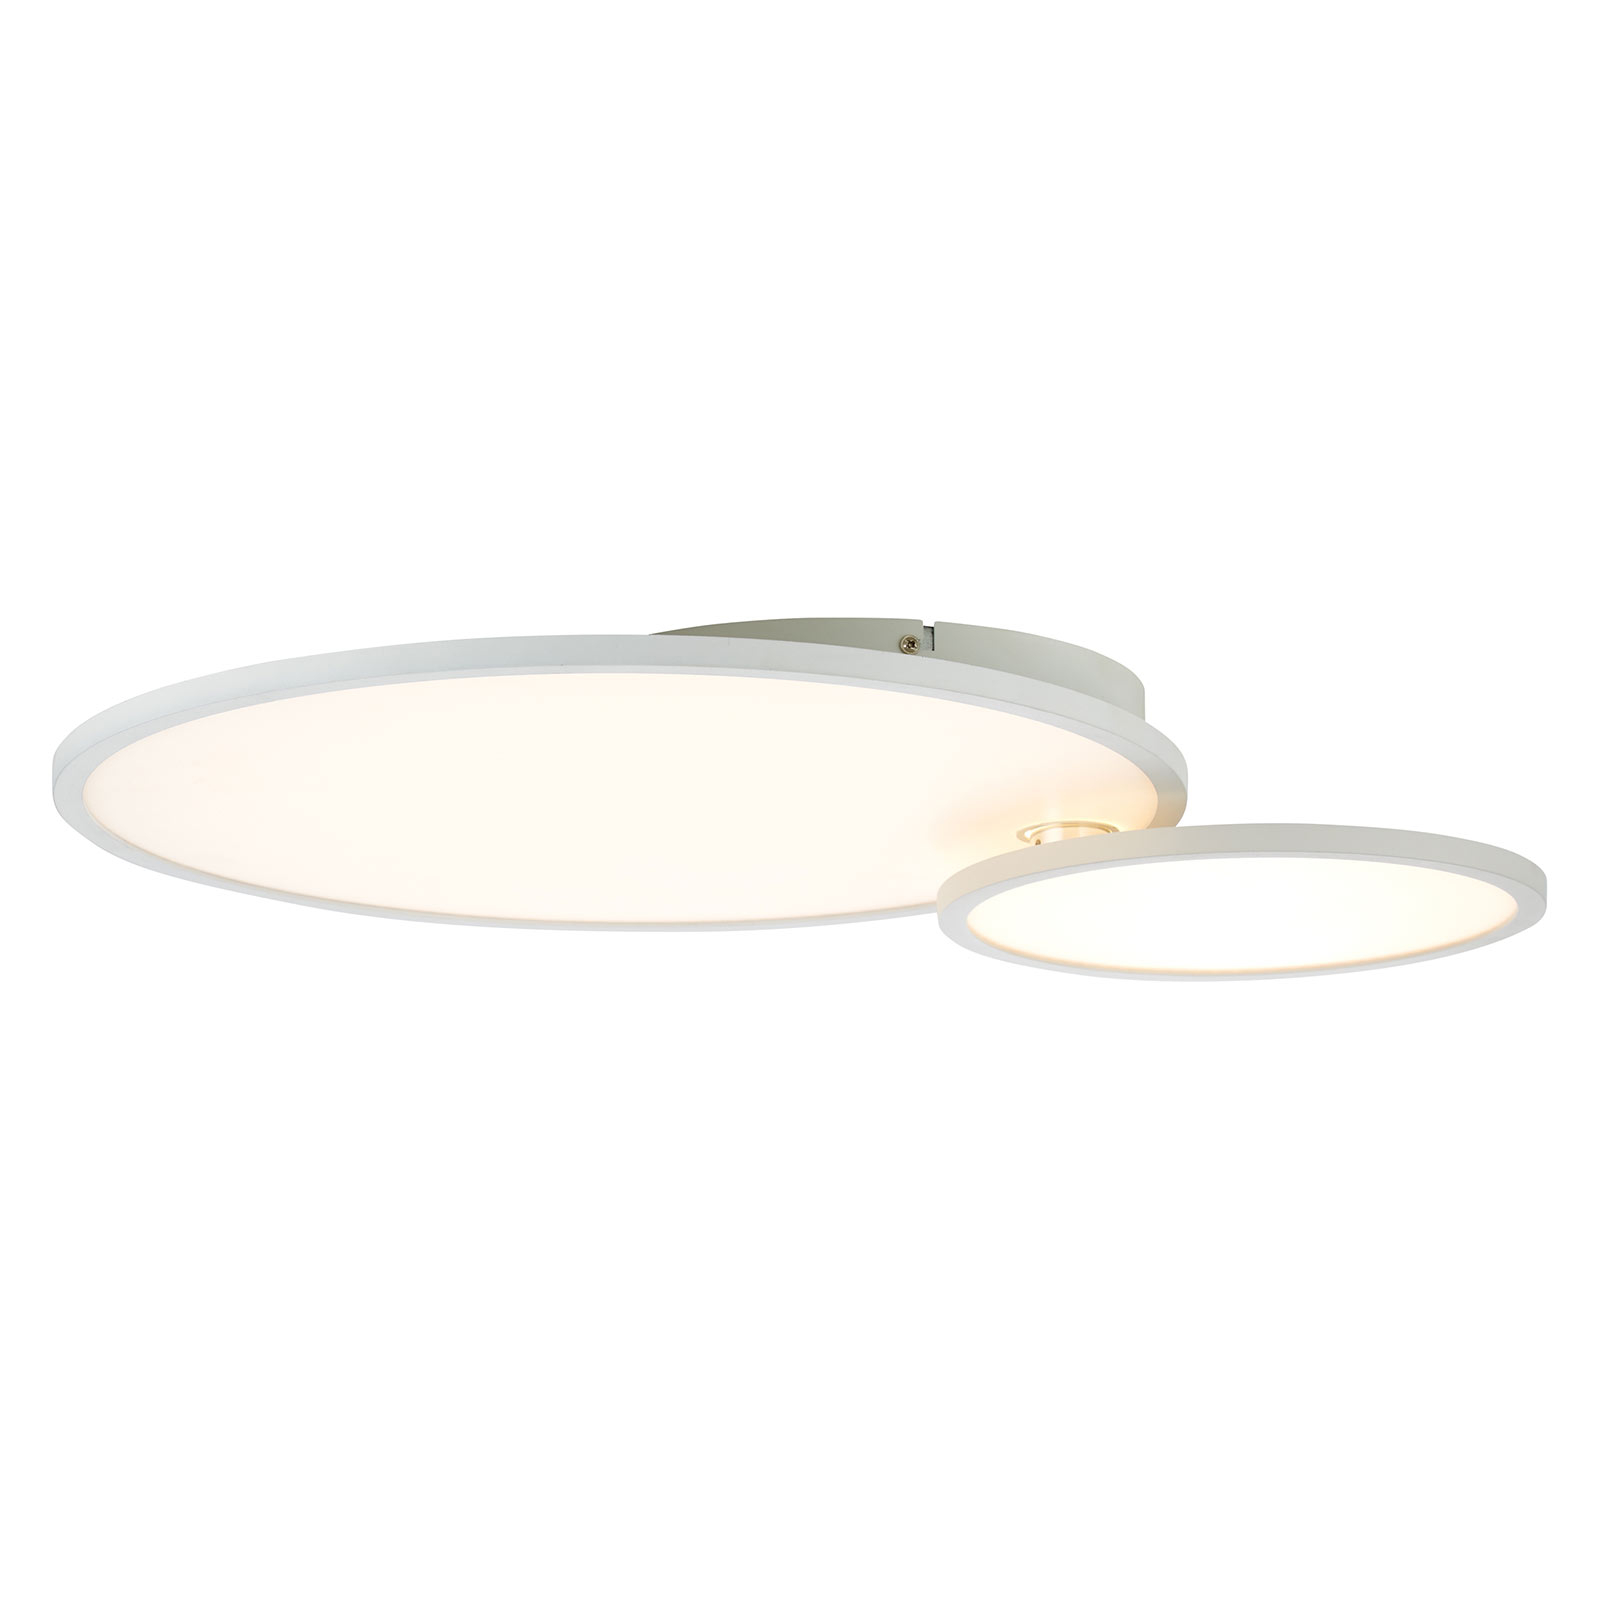 LED plafondlamp Bility, rond, frame wit